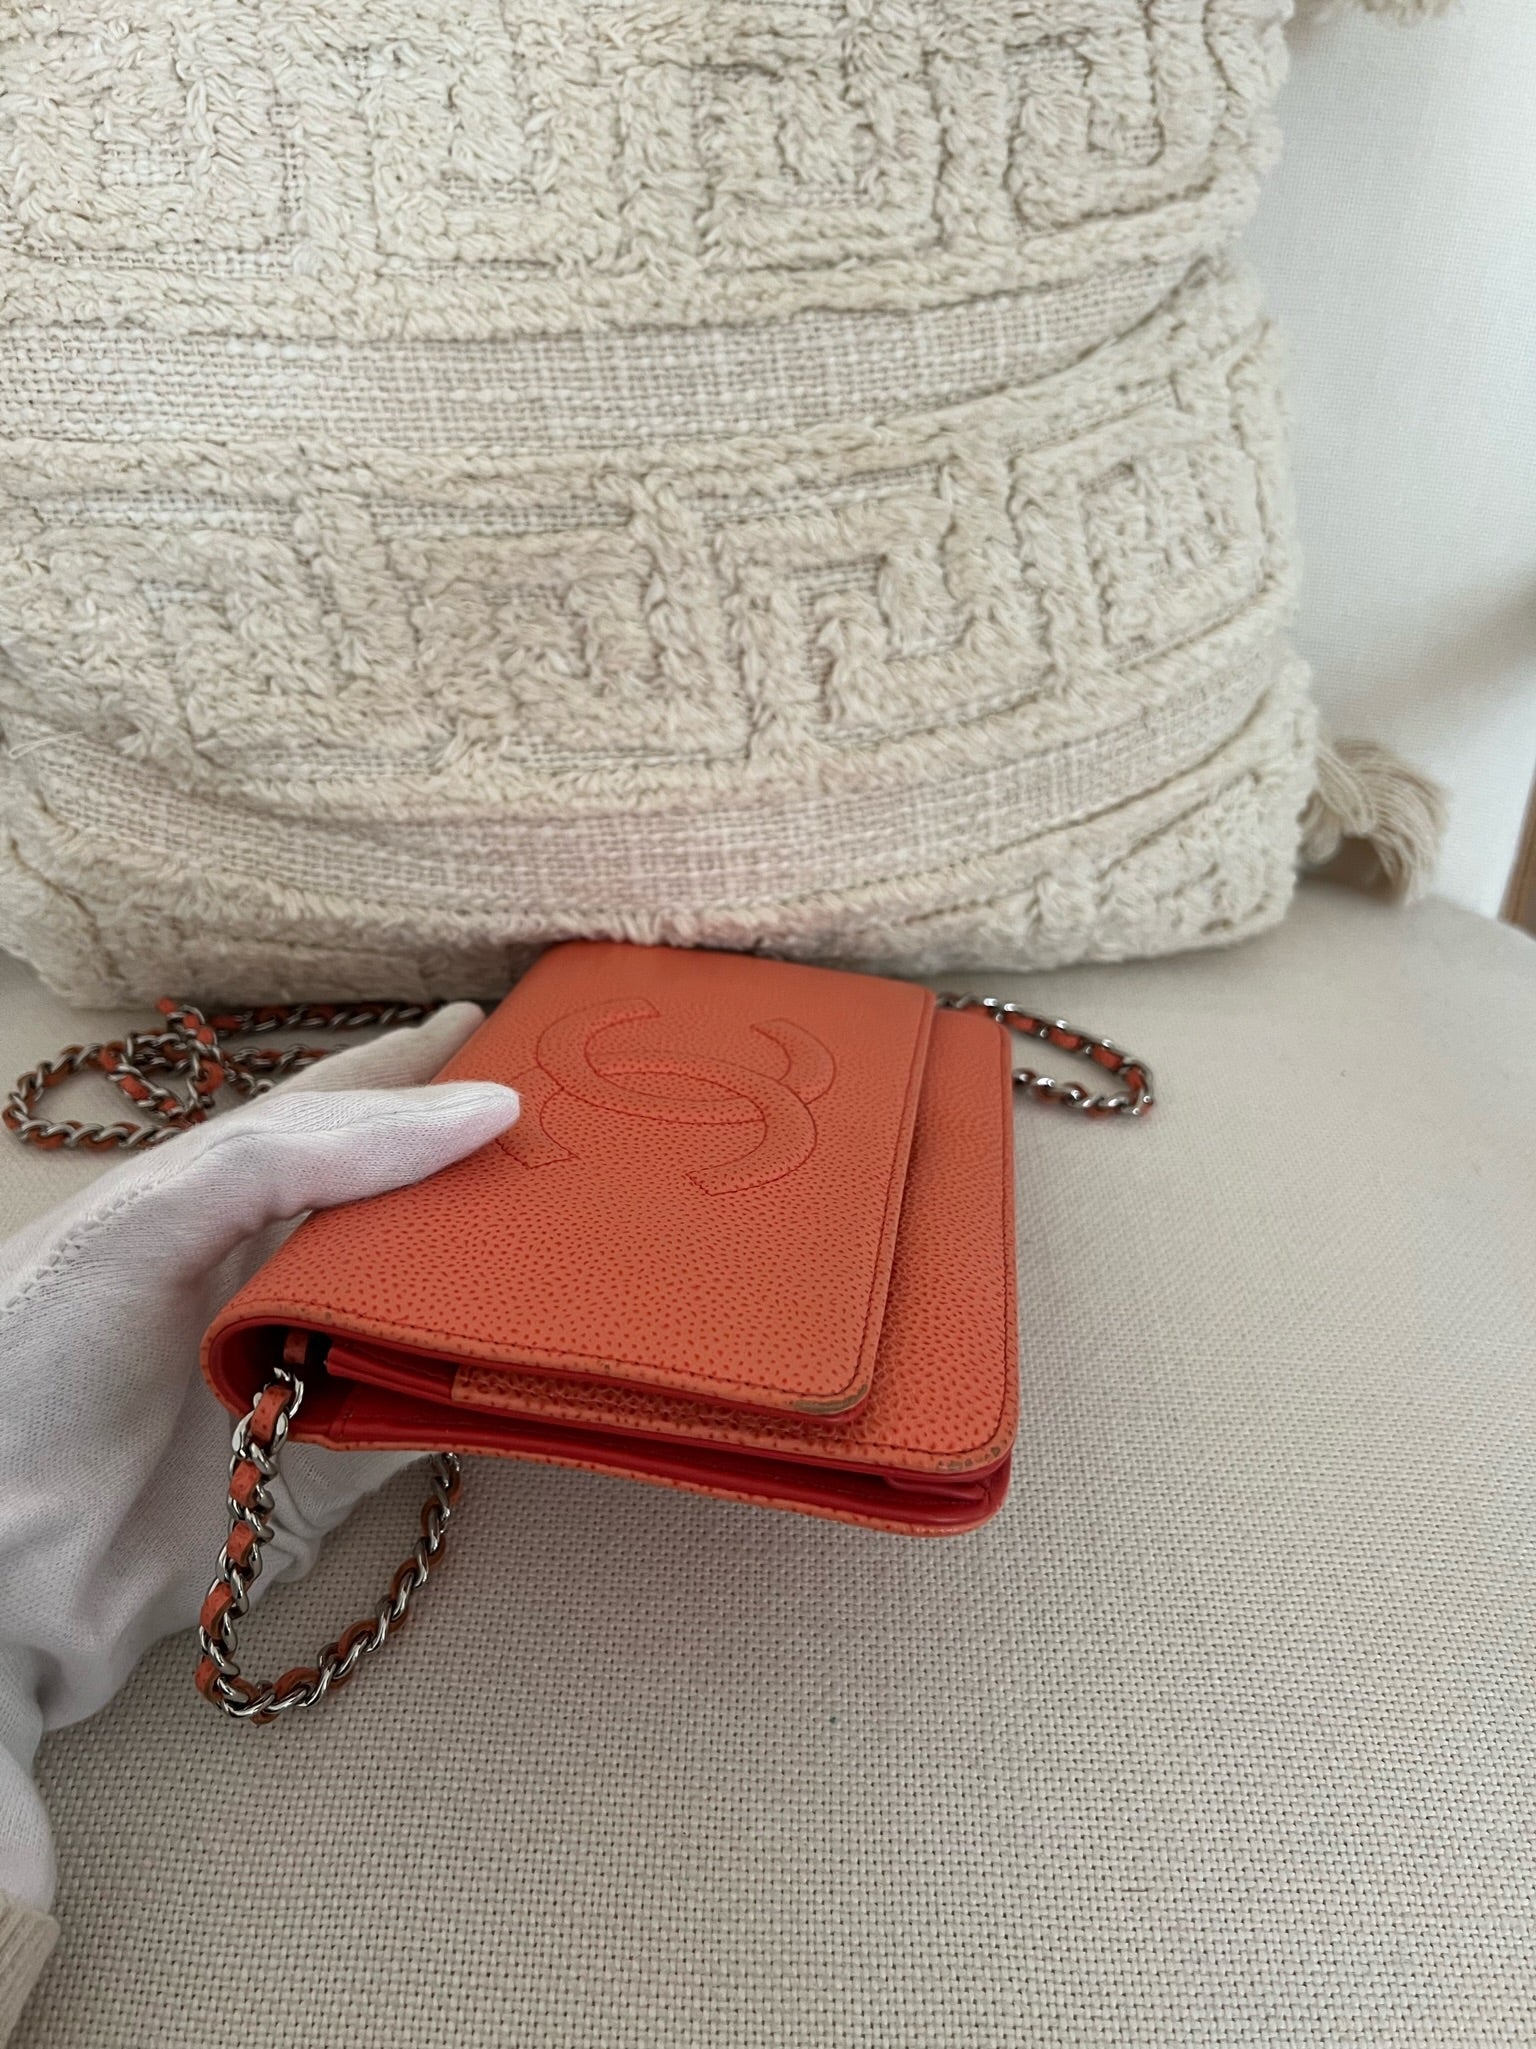 Chanel WOC Wallet on Chain Orange